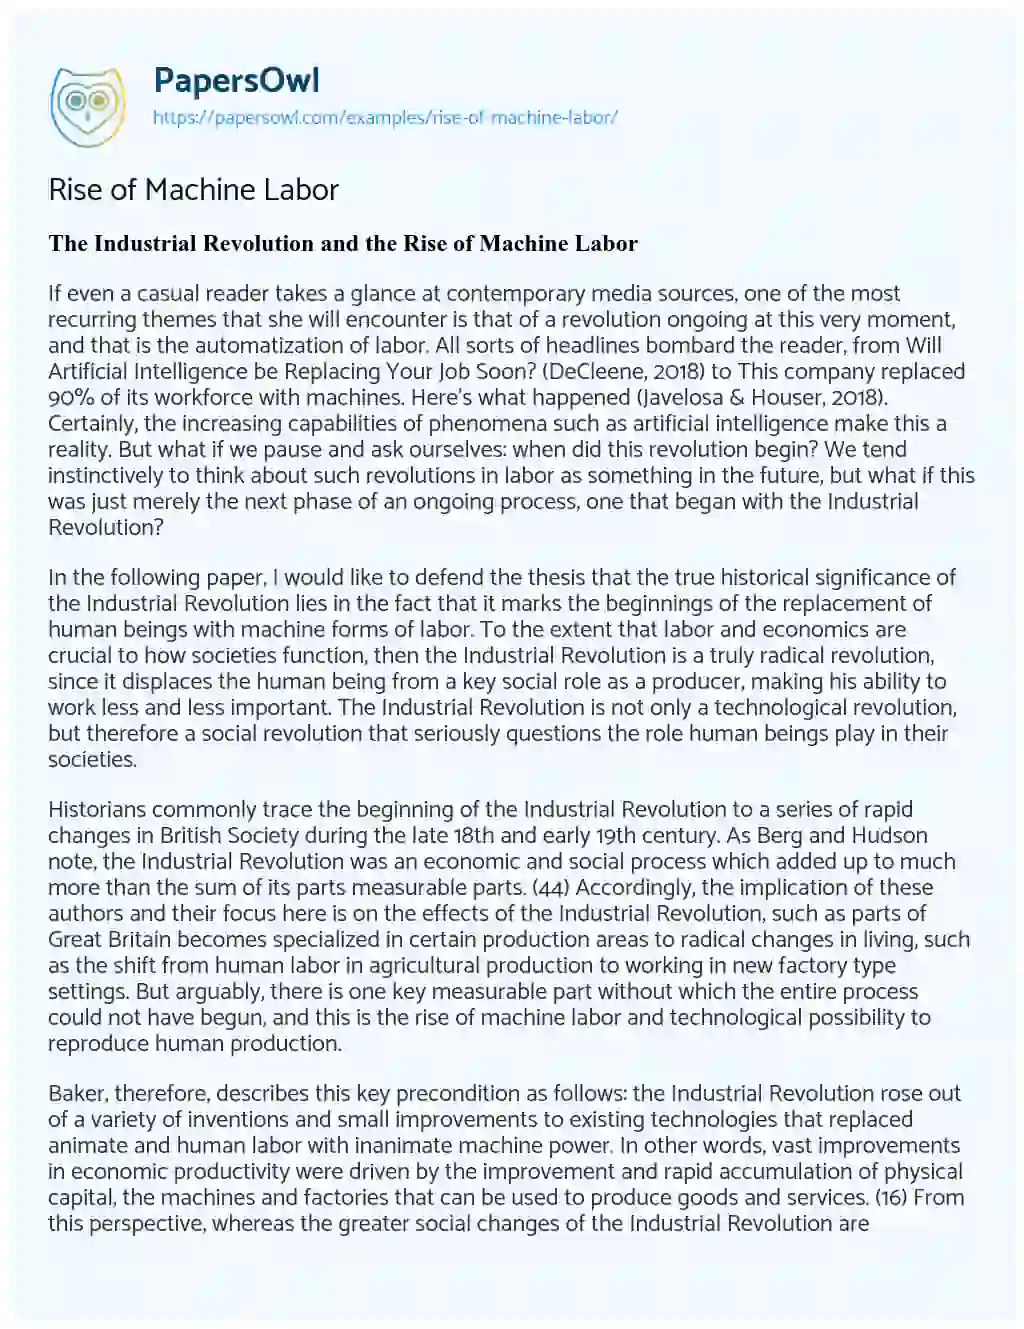 Rise of Machine Labor essay